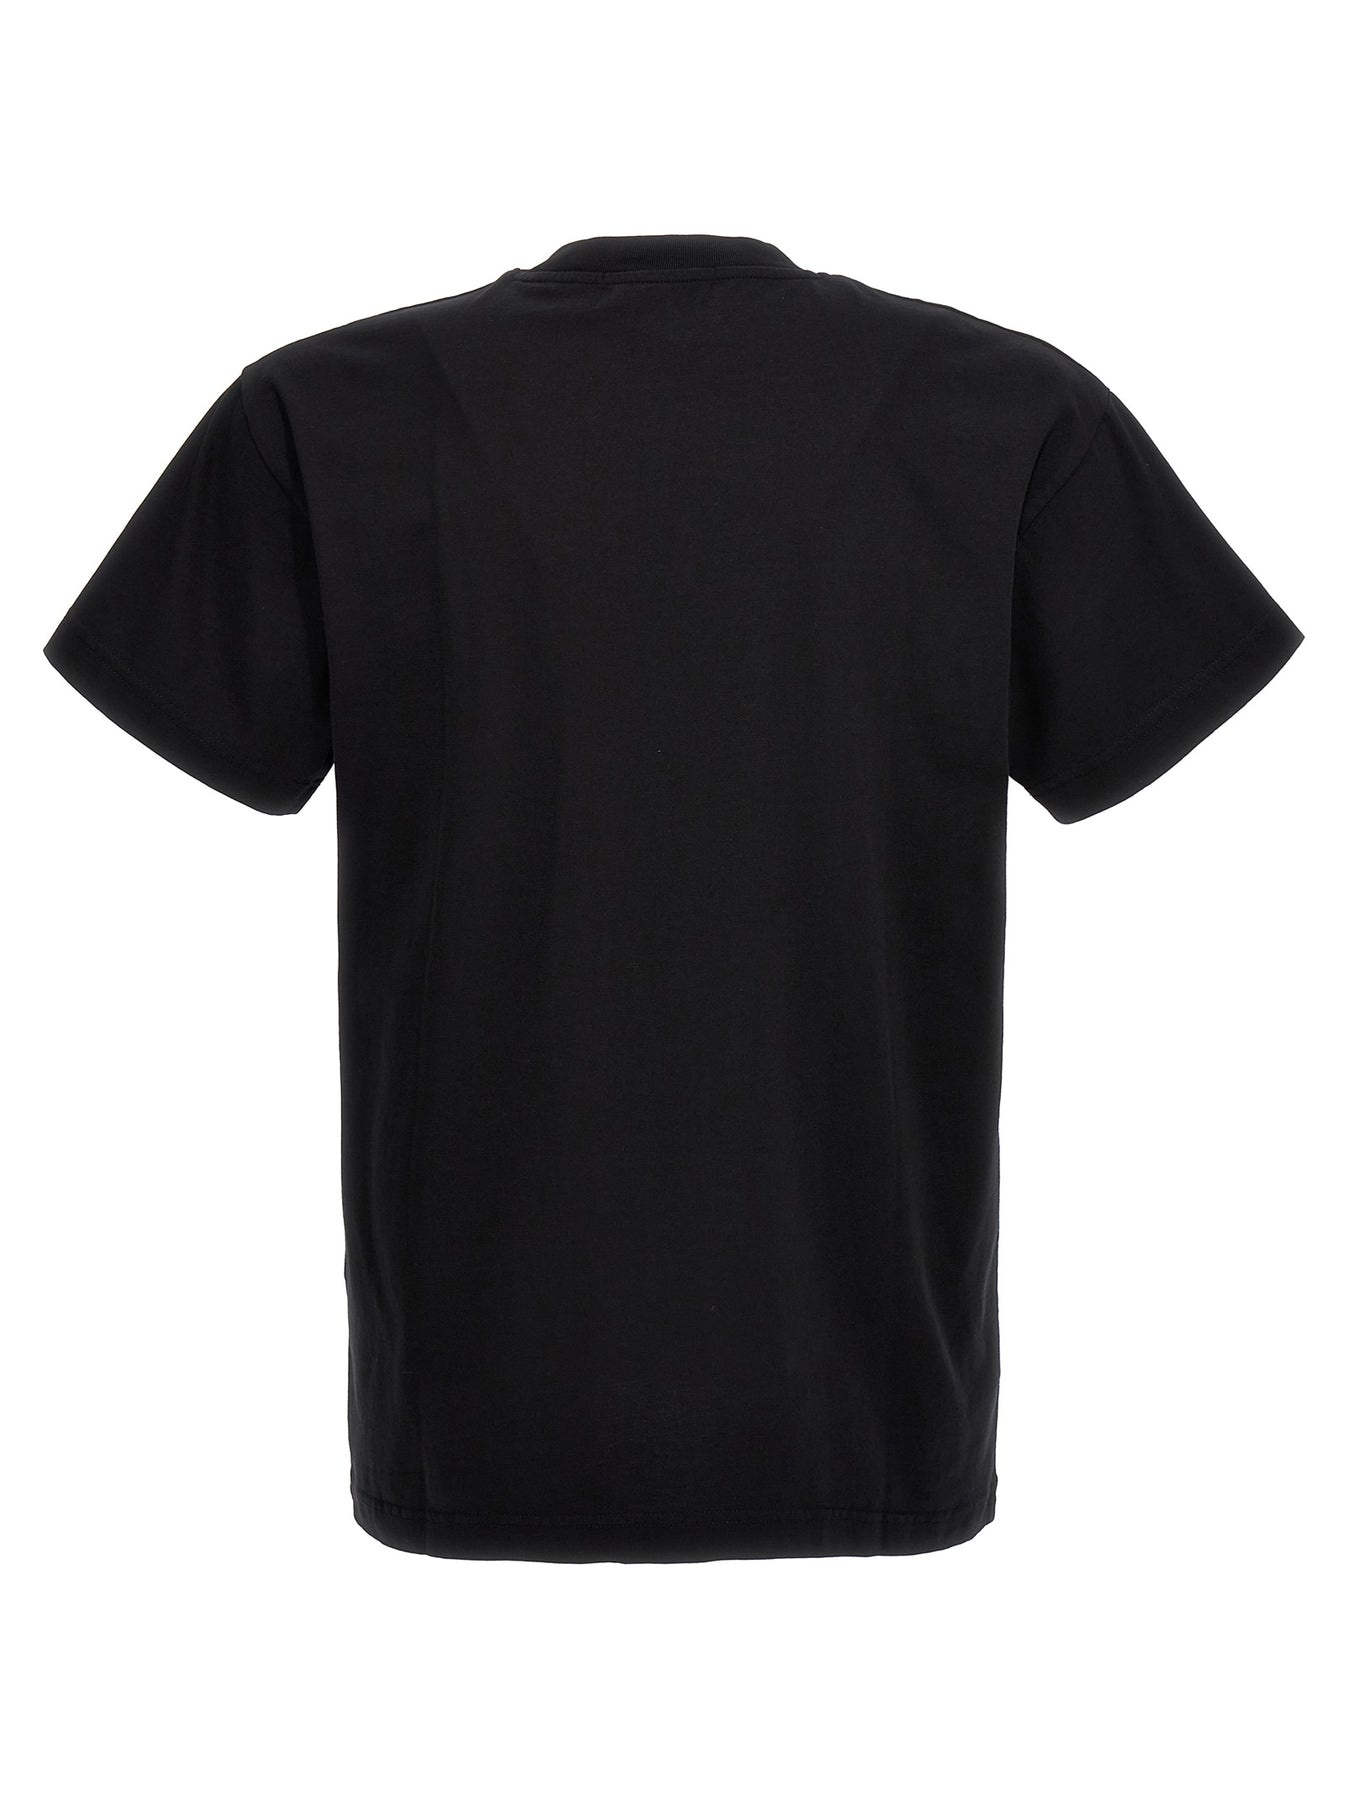 Tap Shoe T-Shirt Black - 3